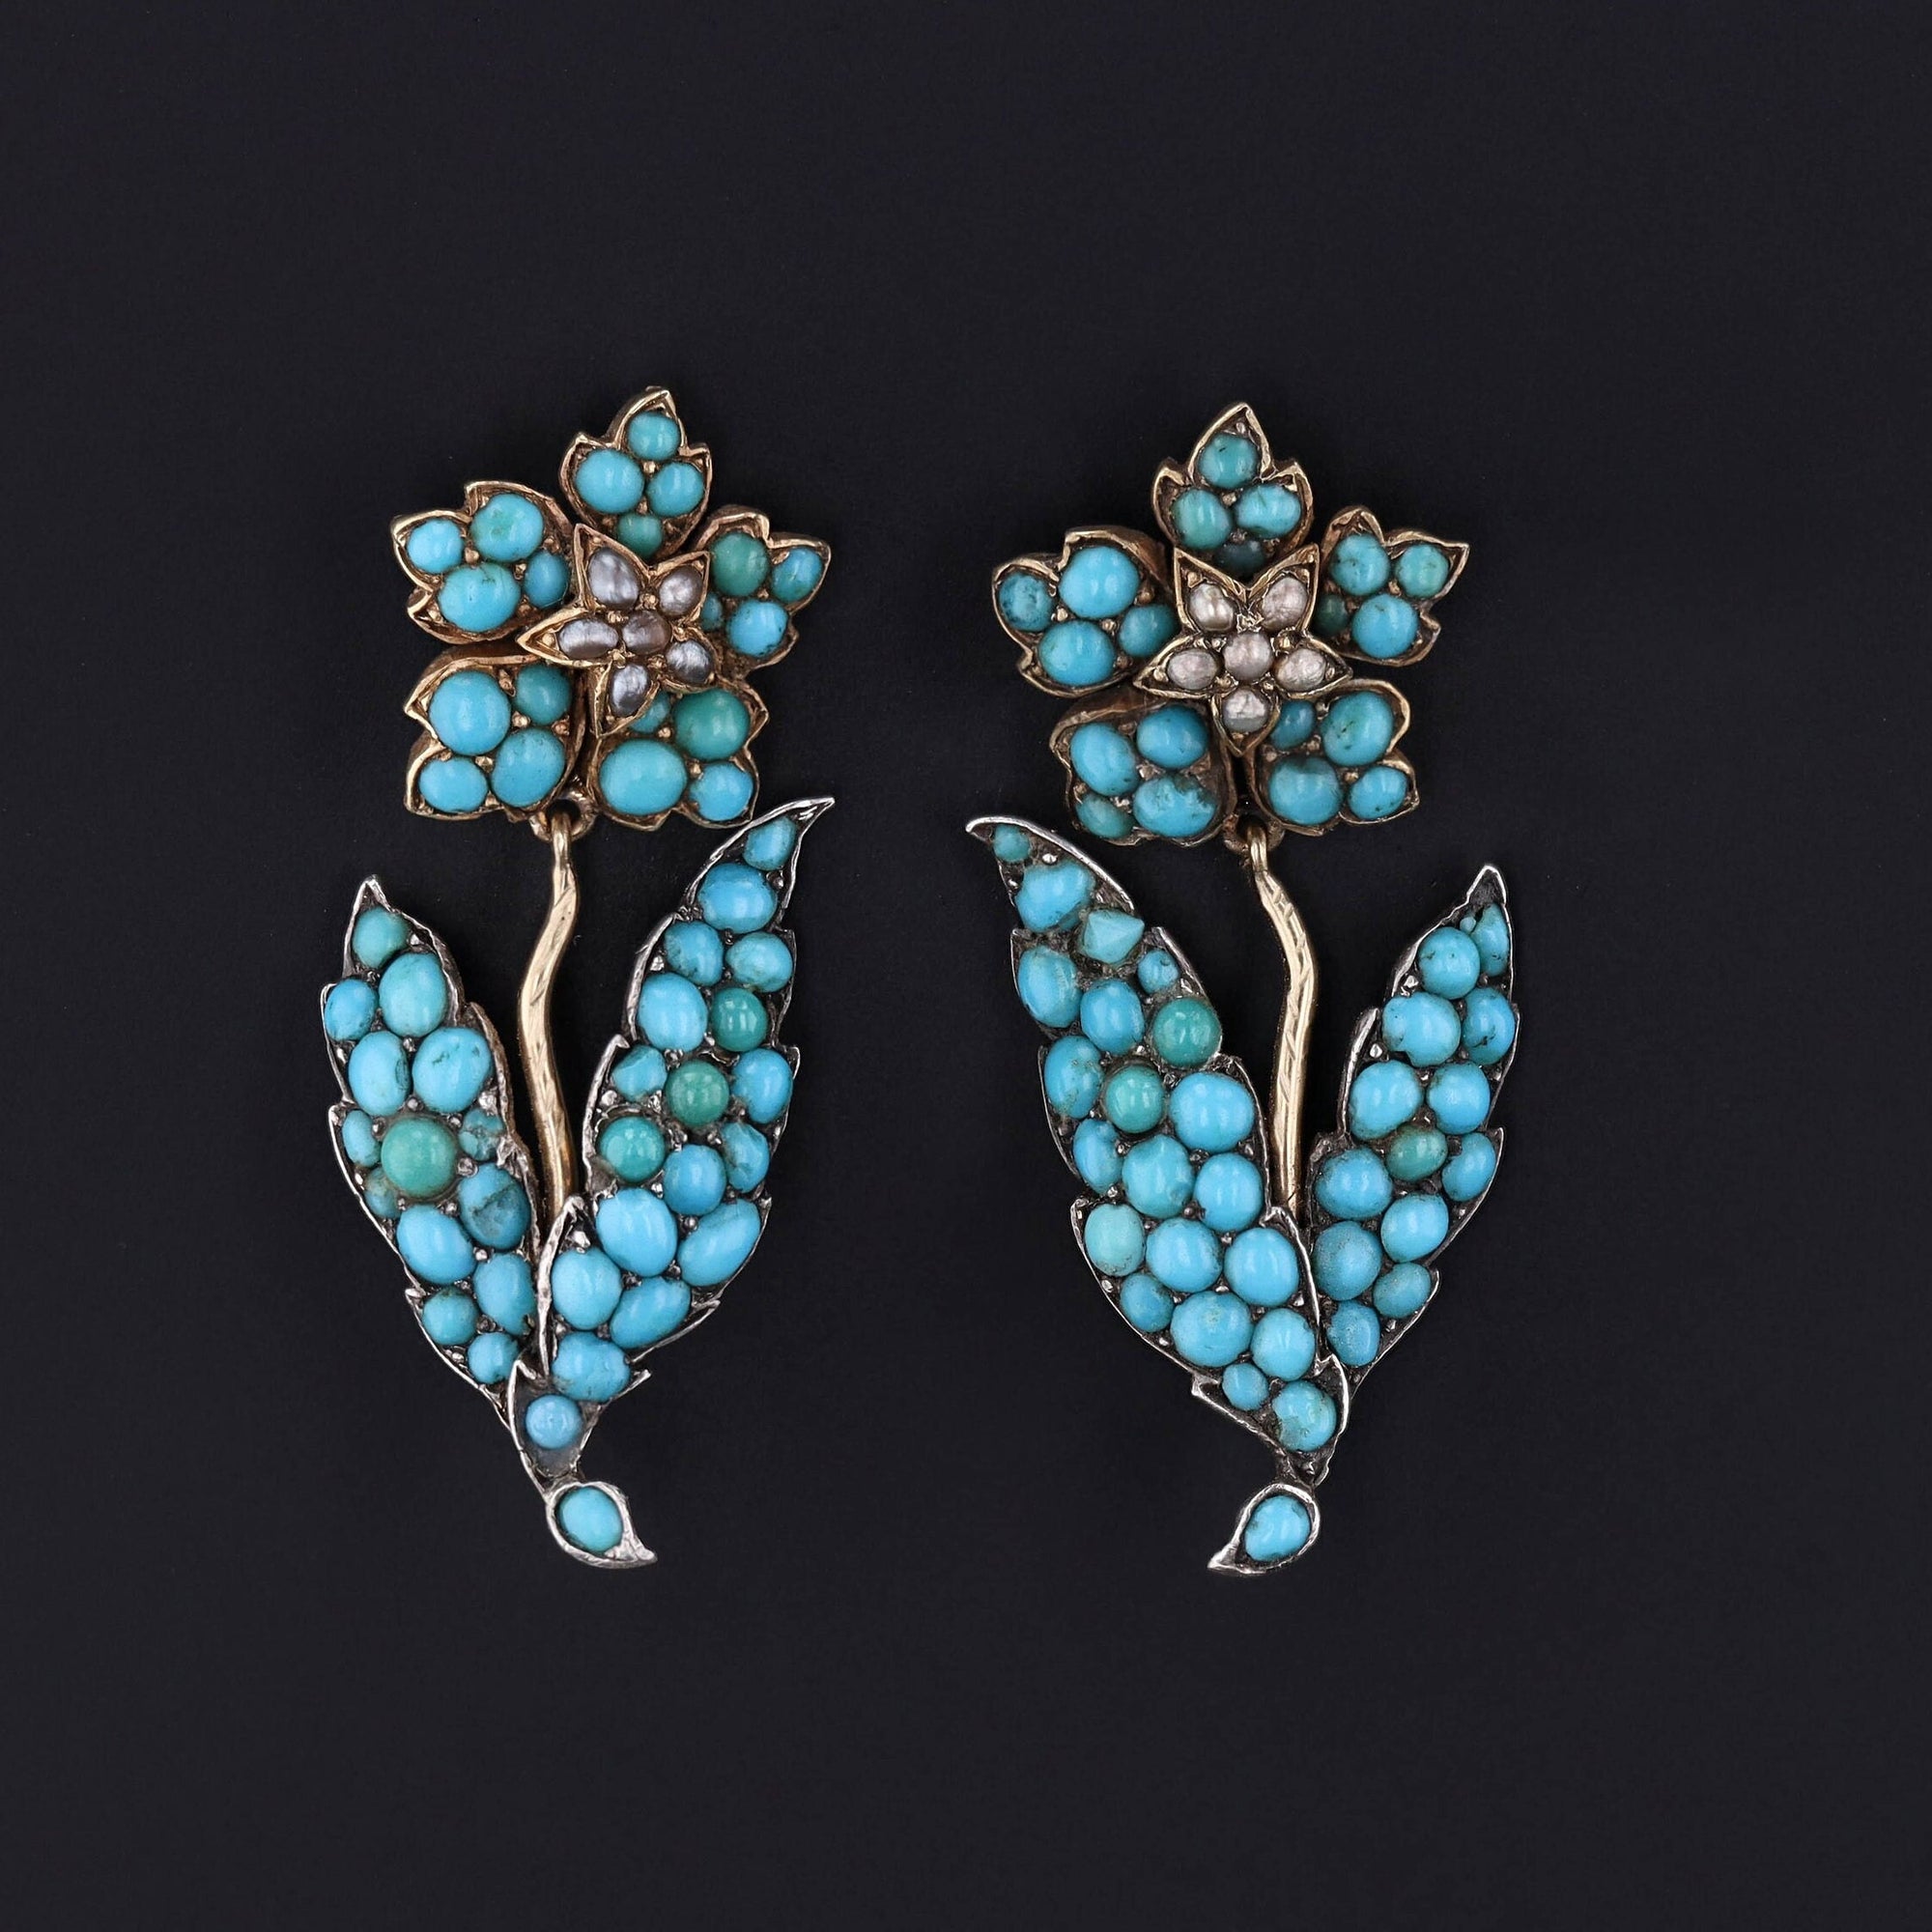 Turquoise Flower Earrings | Silver, 14k Gold, Turquoise & Pearl Earrings 